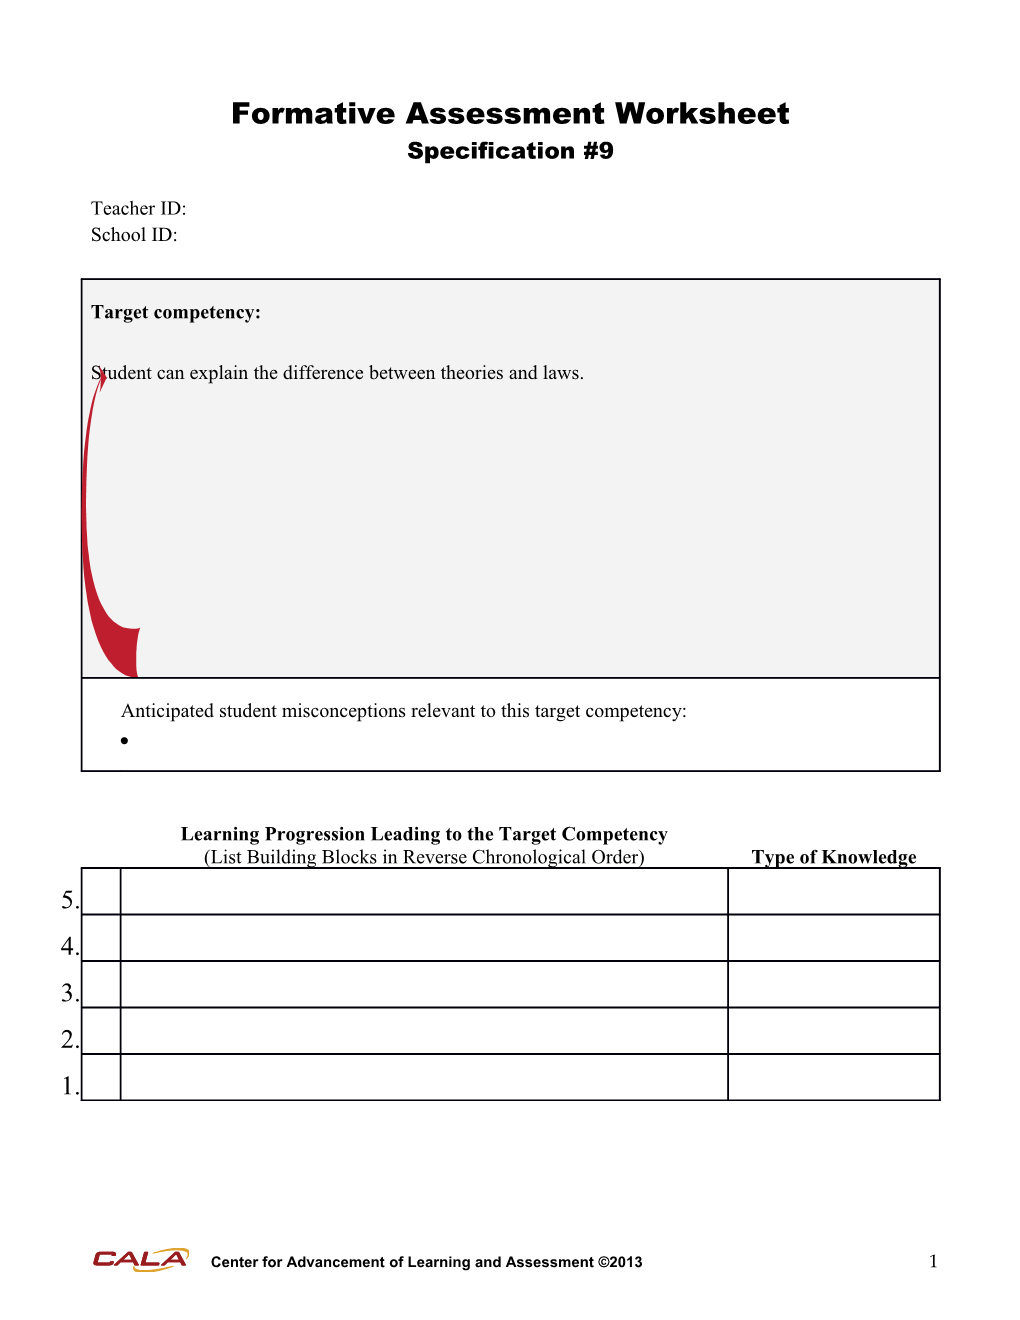 Formative Assessmentworksheet Specification #9